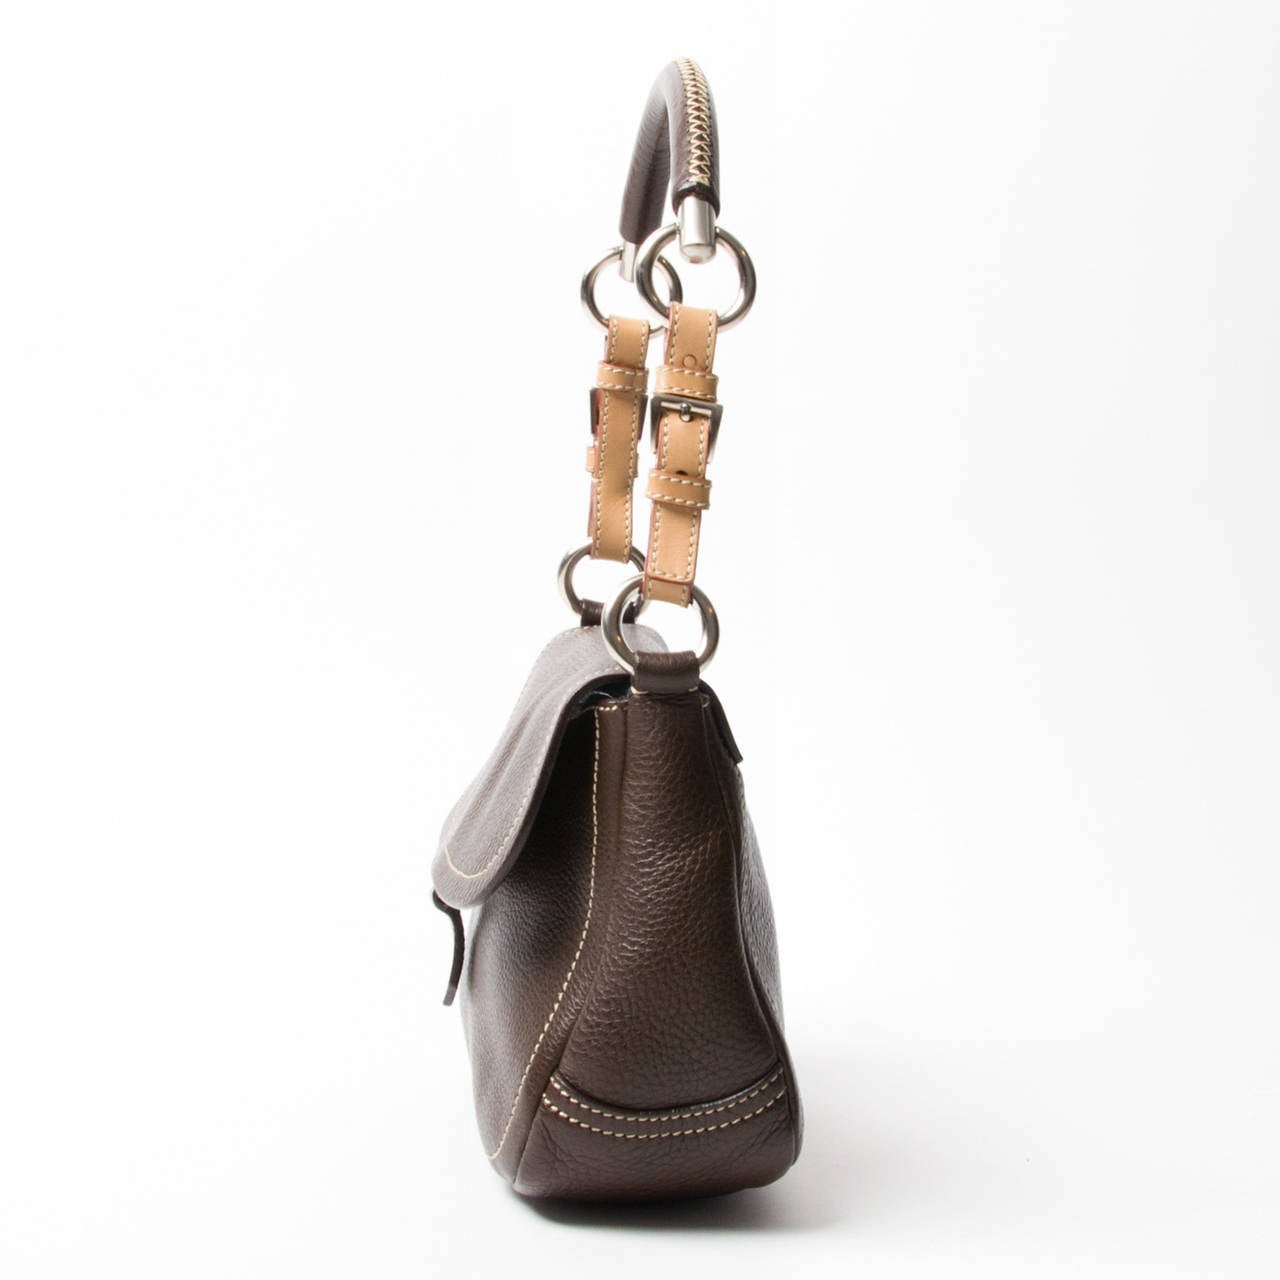 Prada Chocolat brown shoulder bag with silver hardware. 
Magnetic closure. One inside zipper pocket.